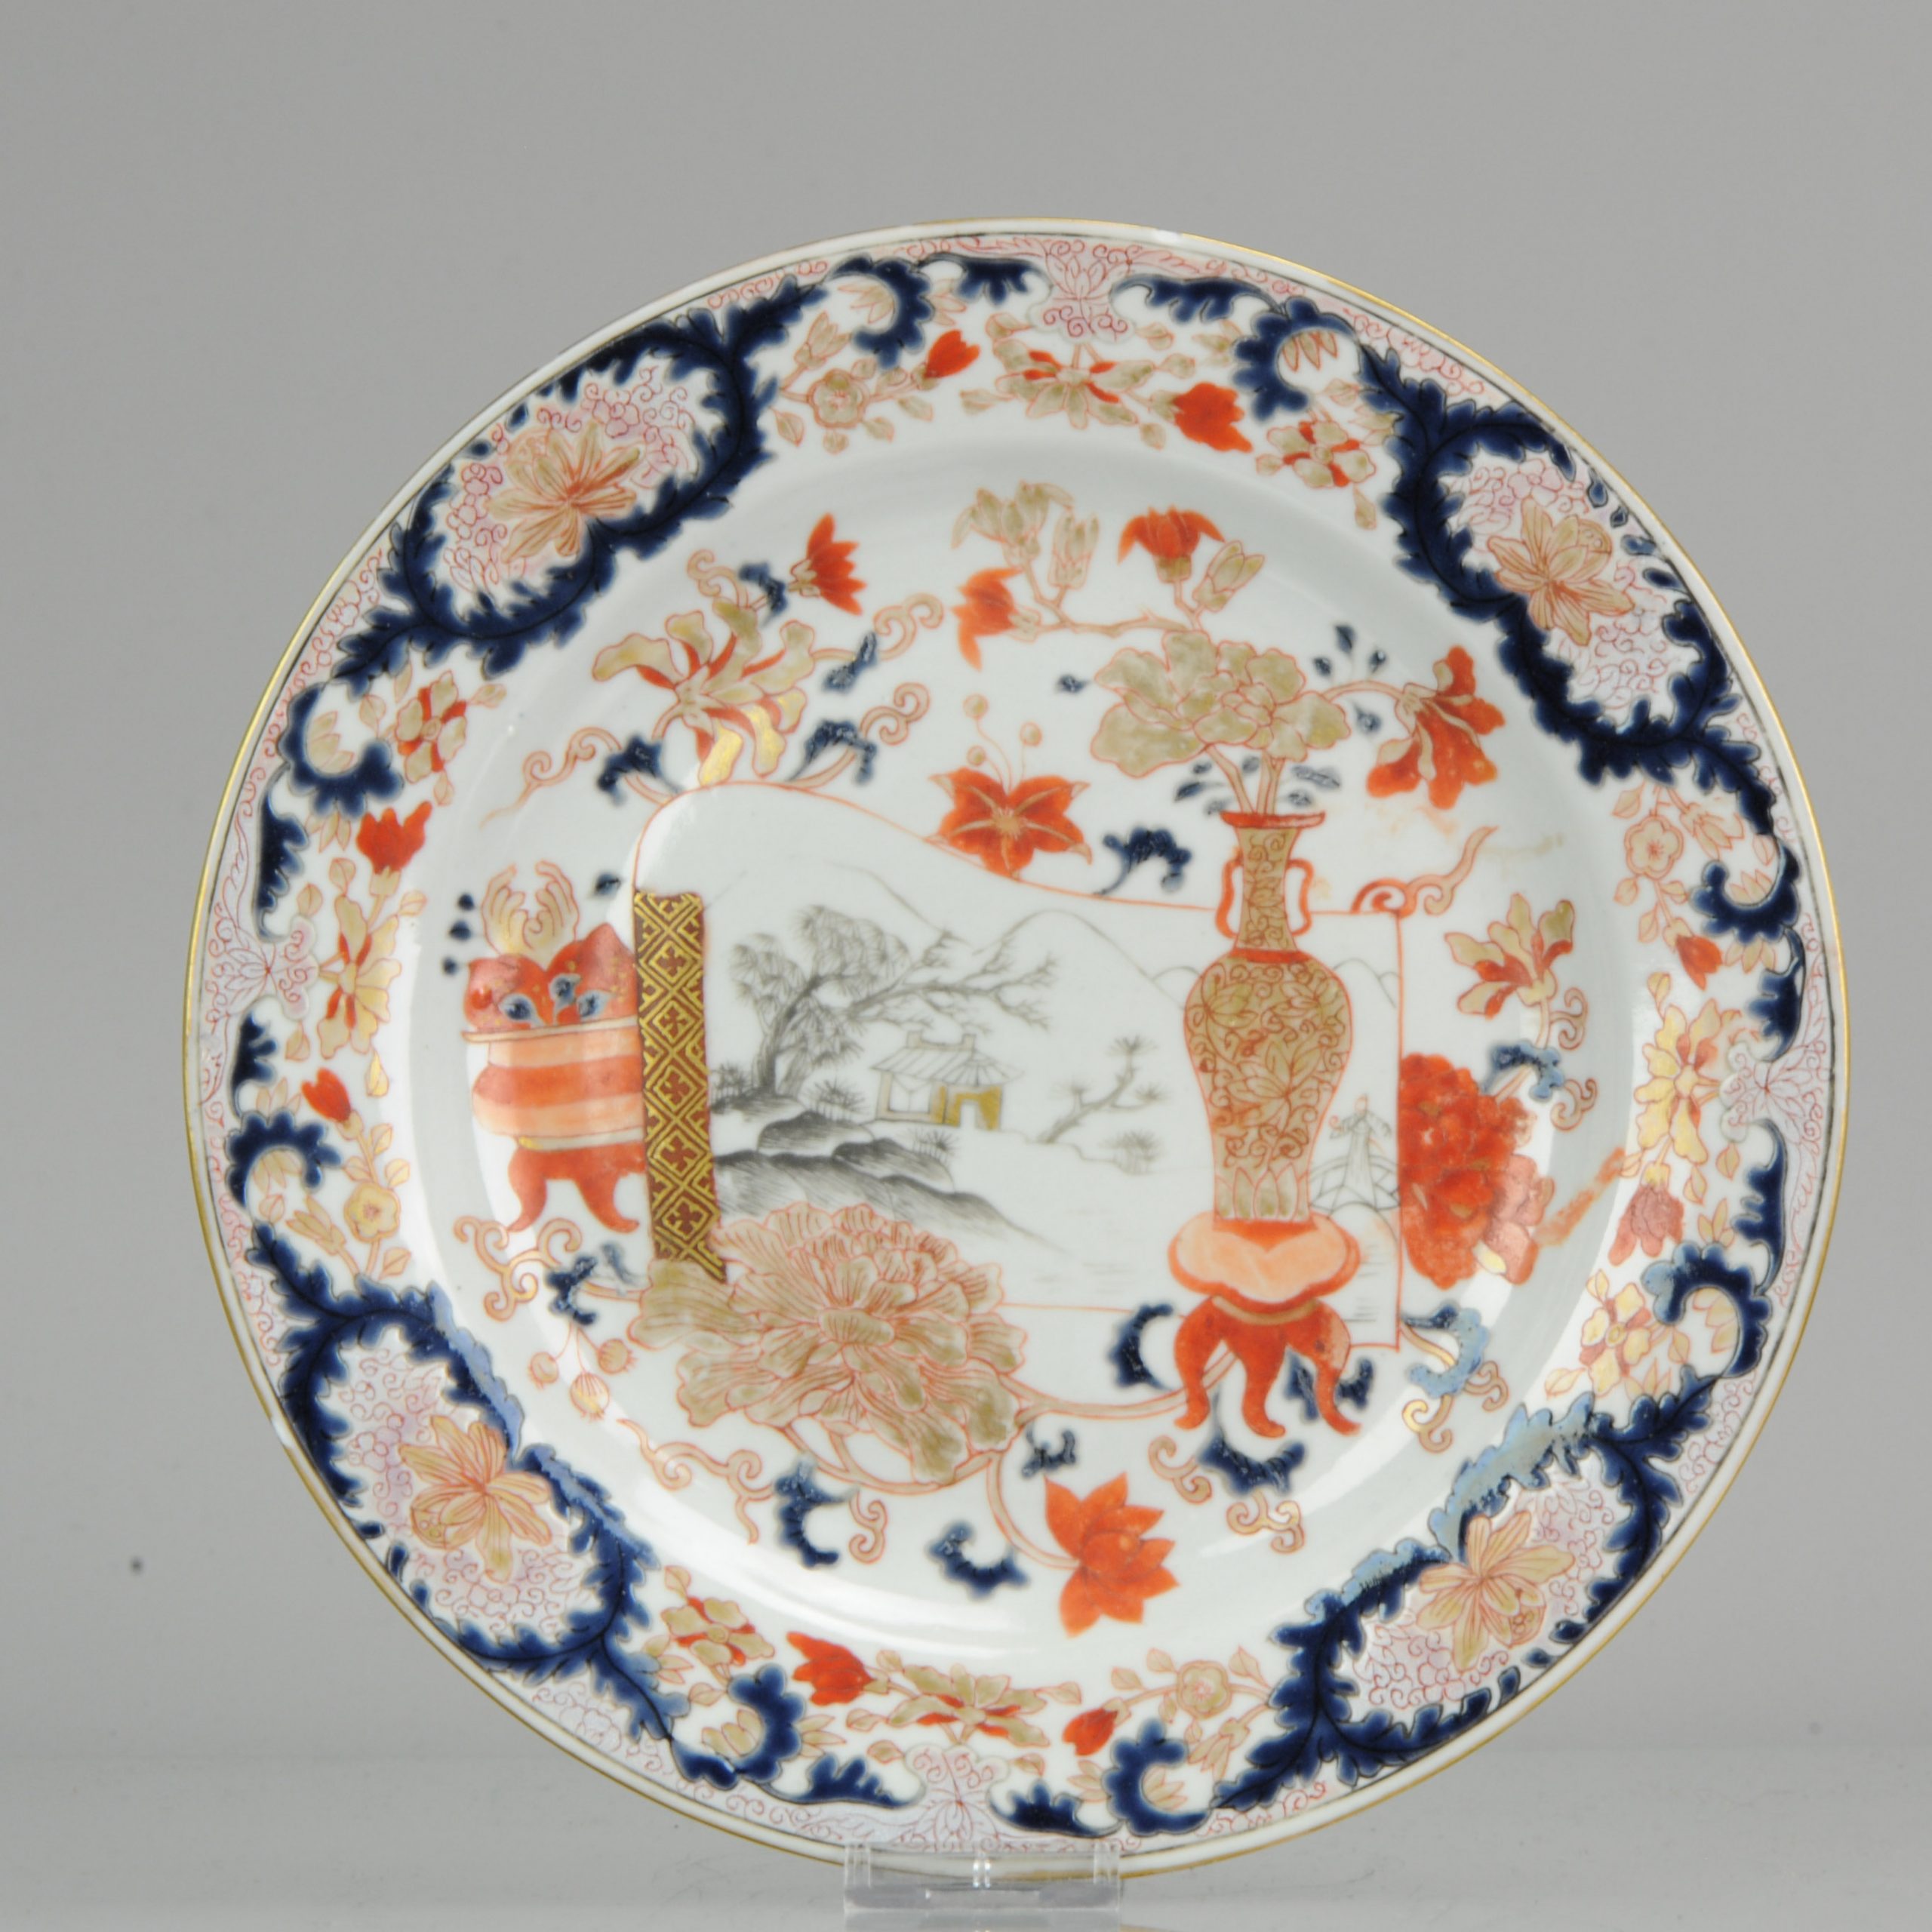 Antique Japanese Imari Plate with a floral Landscape scene Japan 18/19th C